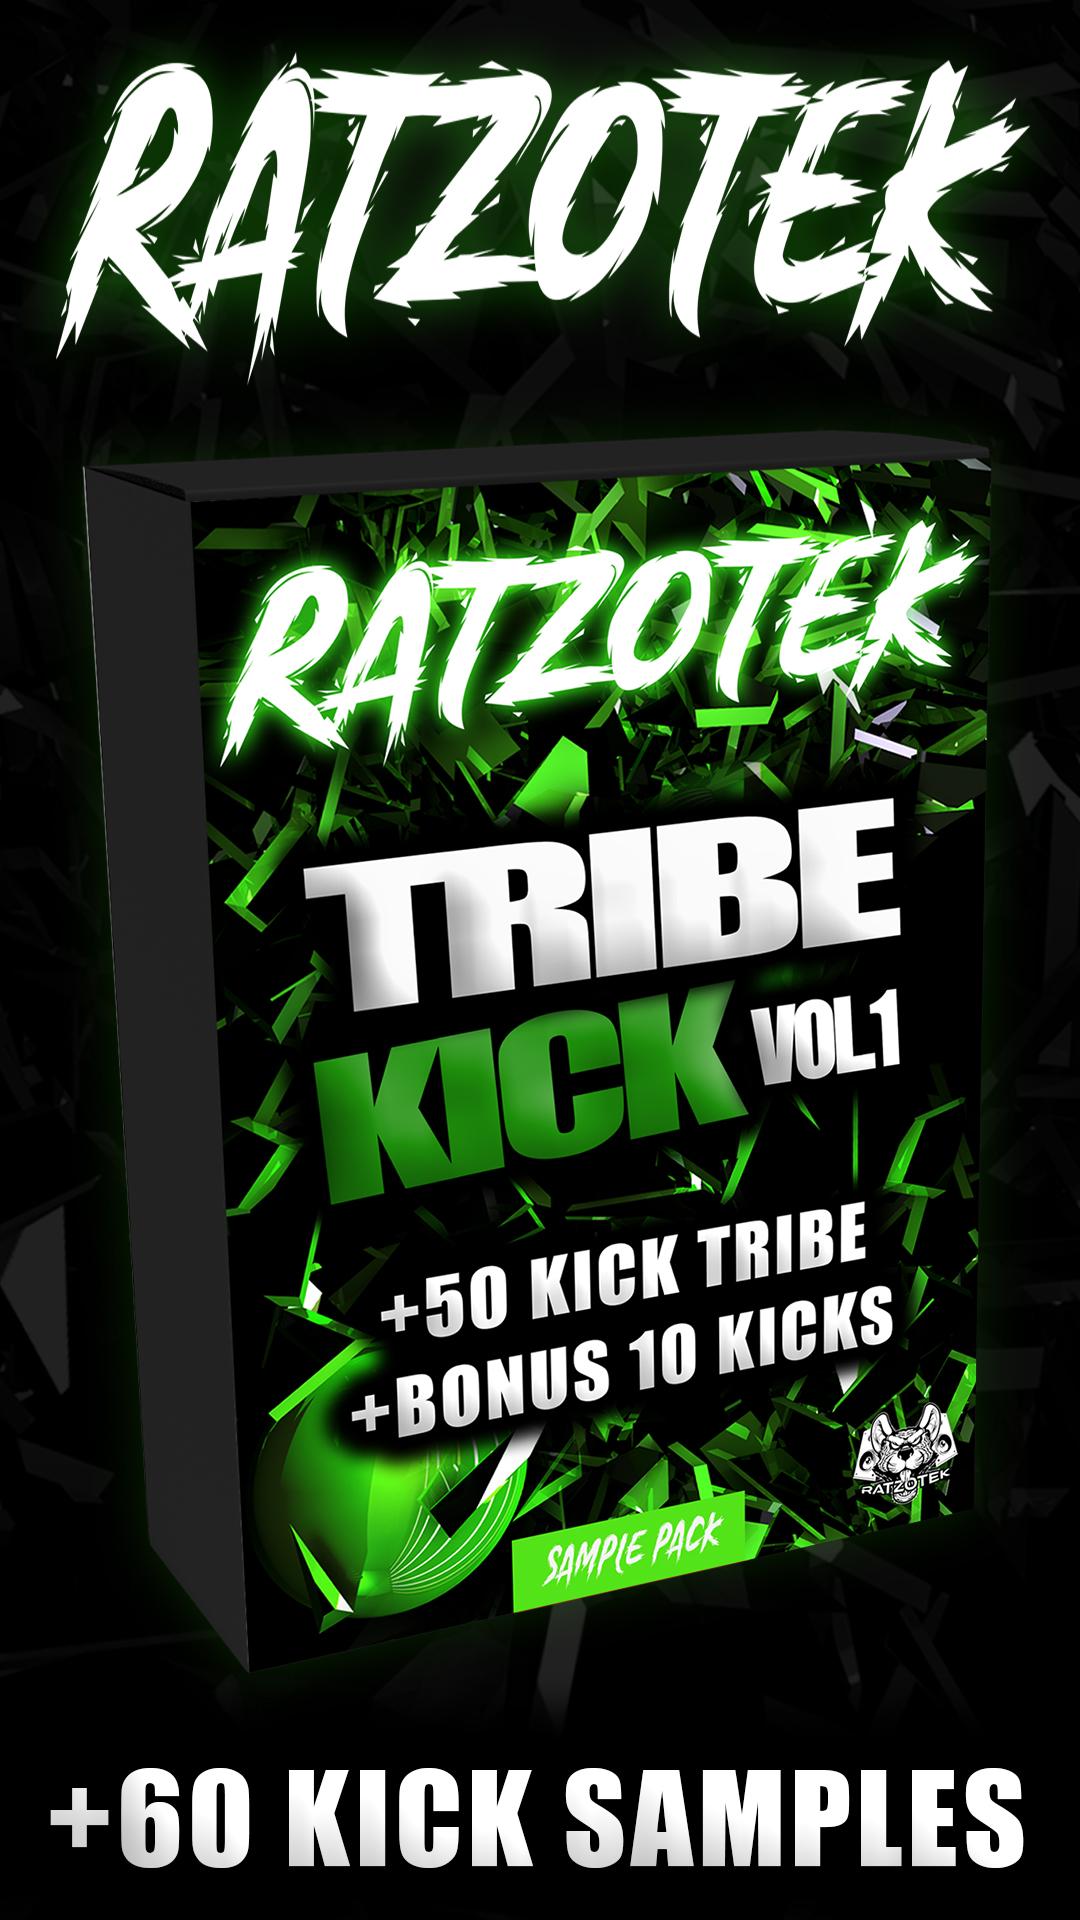 RATZOTEK - Sample Pack KICK'n'TRIBE (Vol.1)